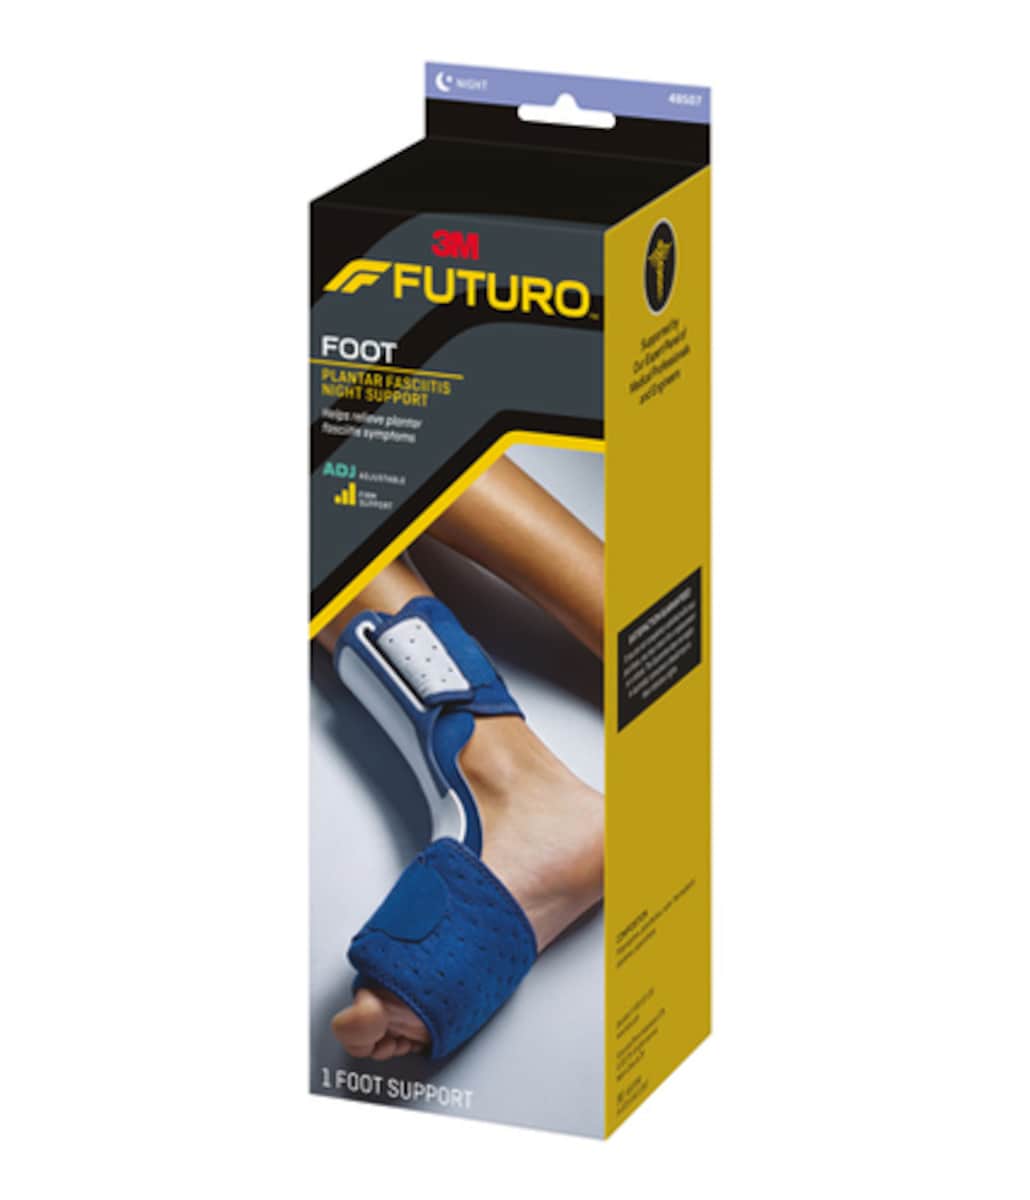 Futuro Foot Plantar Fasciitis Night Support Adjustable